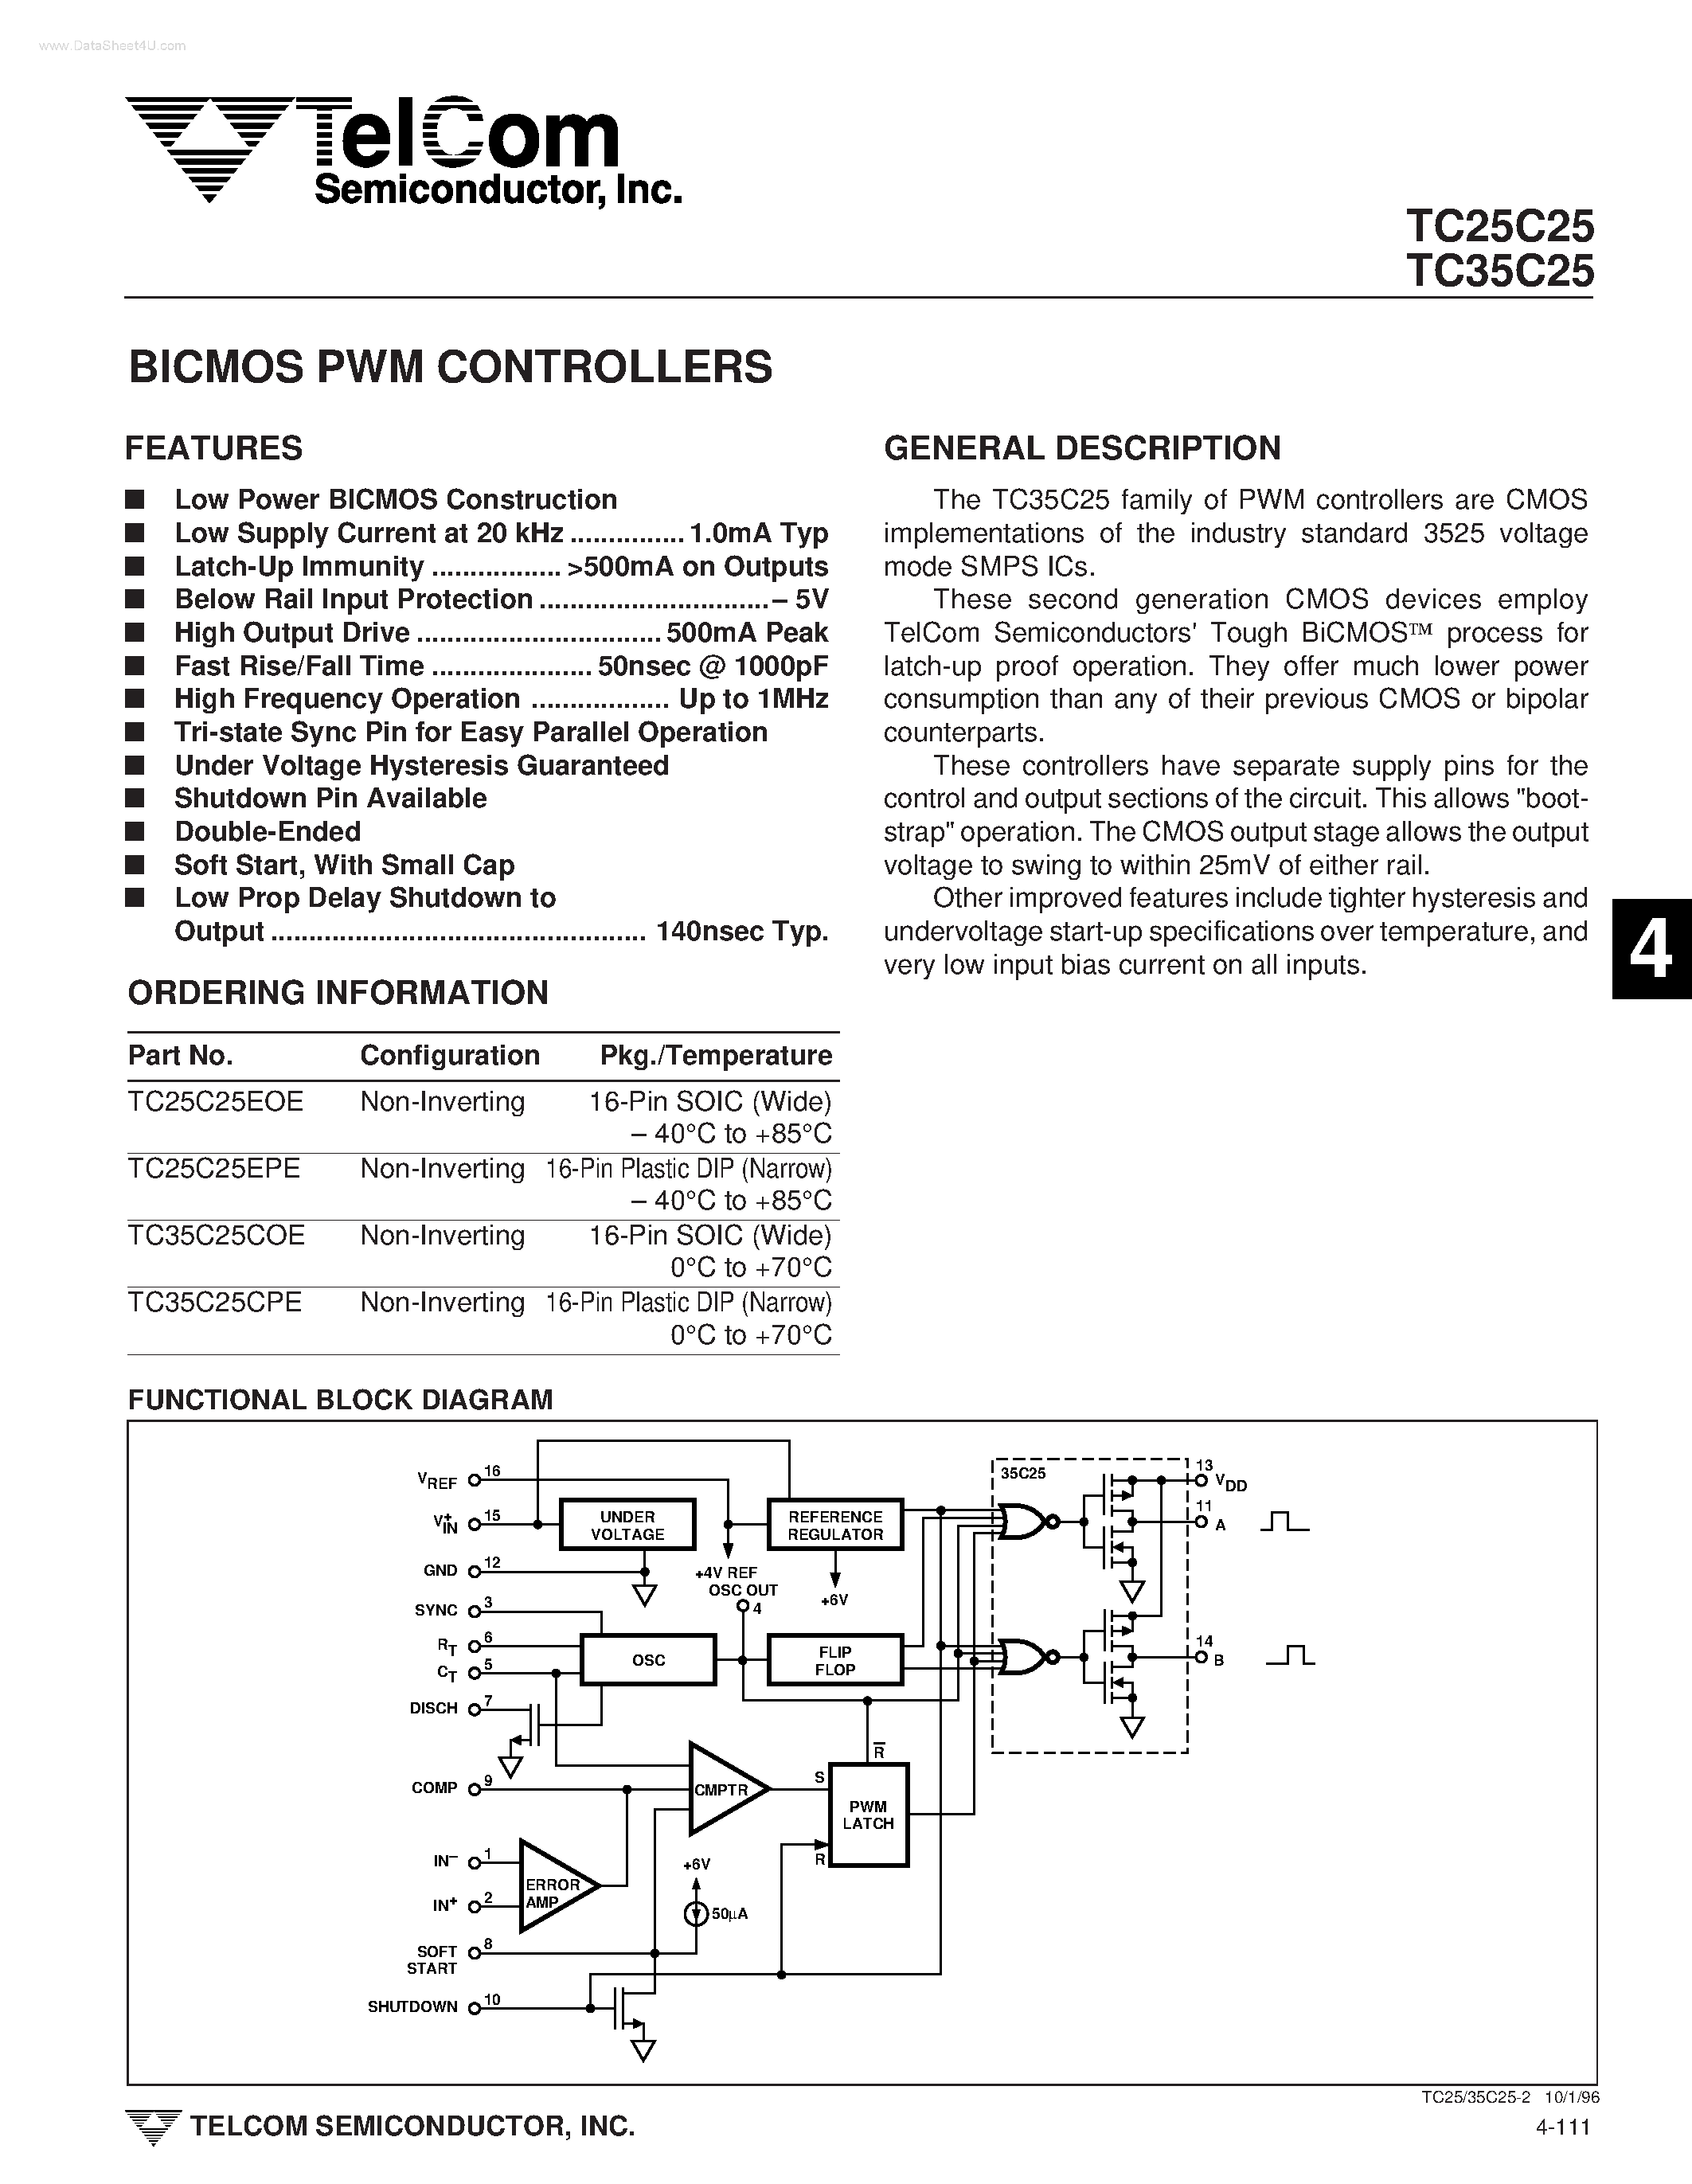 Datasheet TC35C25 - BICMOS PWM CONTROLLERS page 1